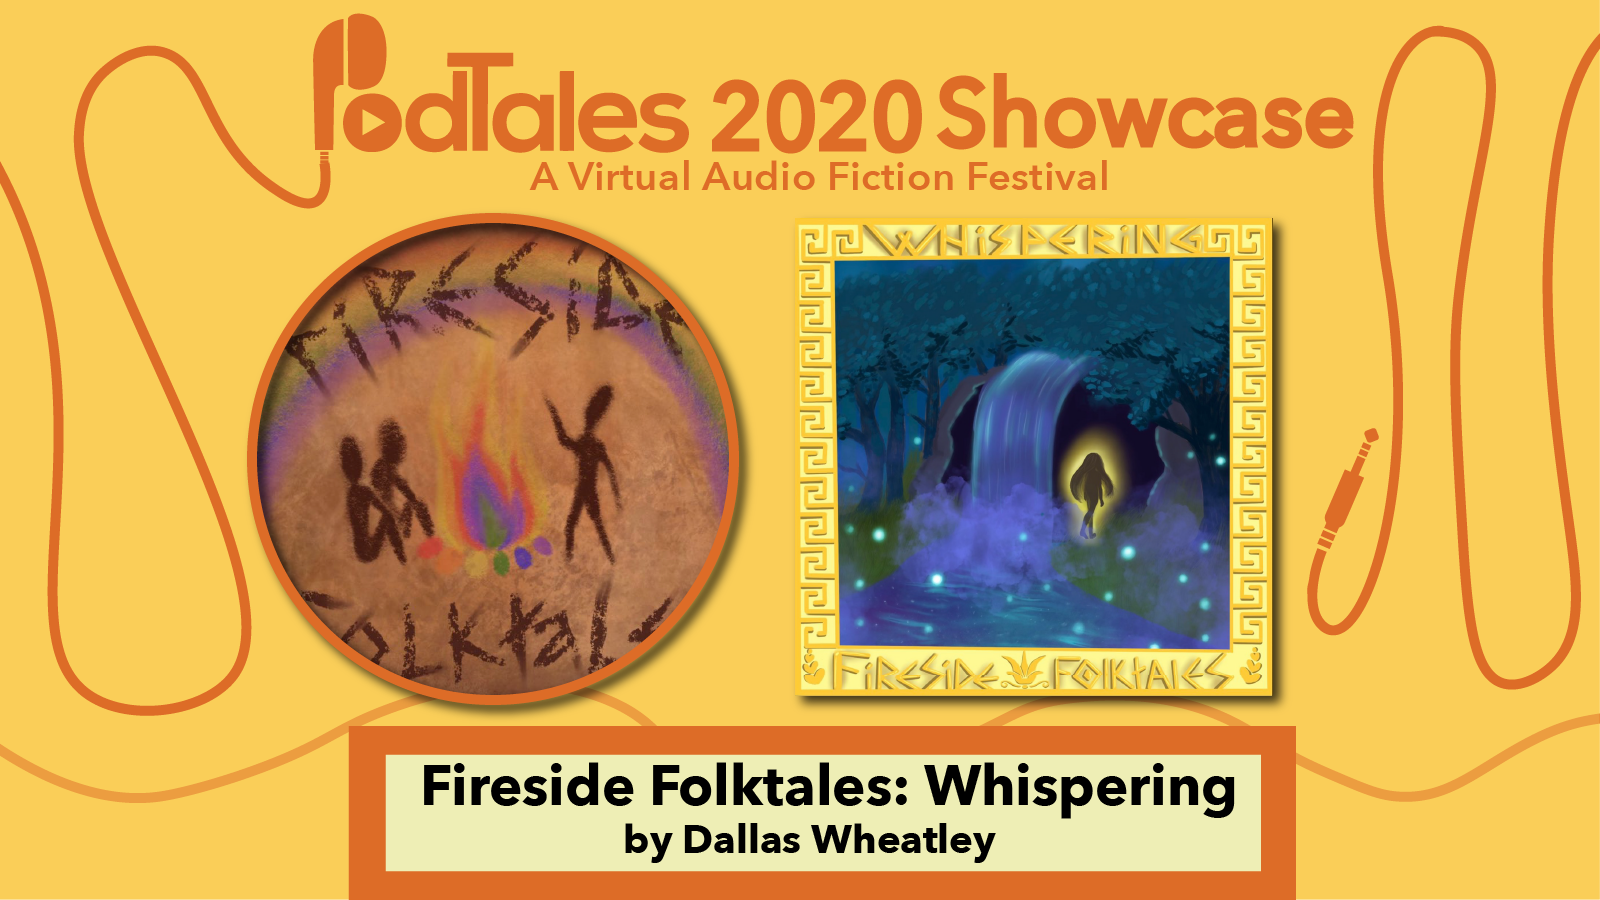 Text reading “PodTales 2020 Showcase: A Virtual Audio Fiction Festival”, Fireside Folktales Show Art, Whispering Show Art, Text reading “Fireside Folktales: Whispering by Dallas Wheatley”